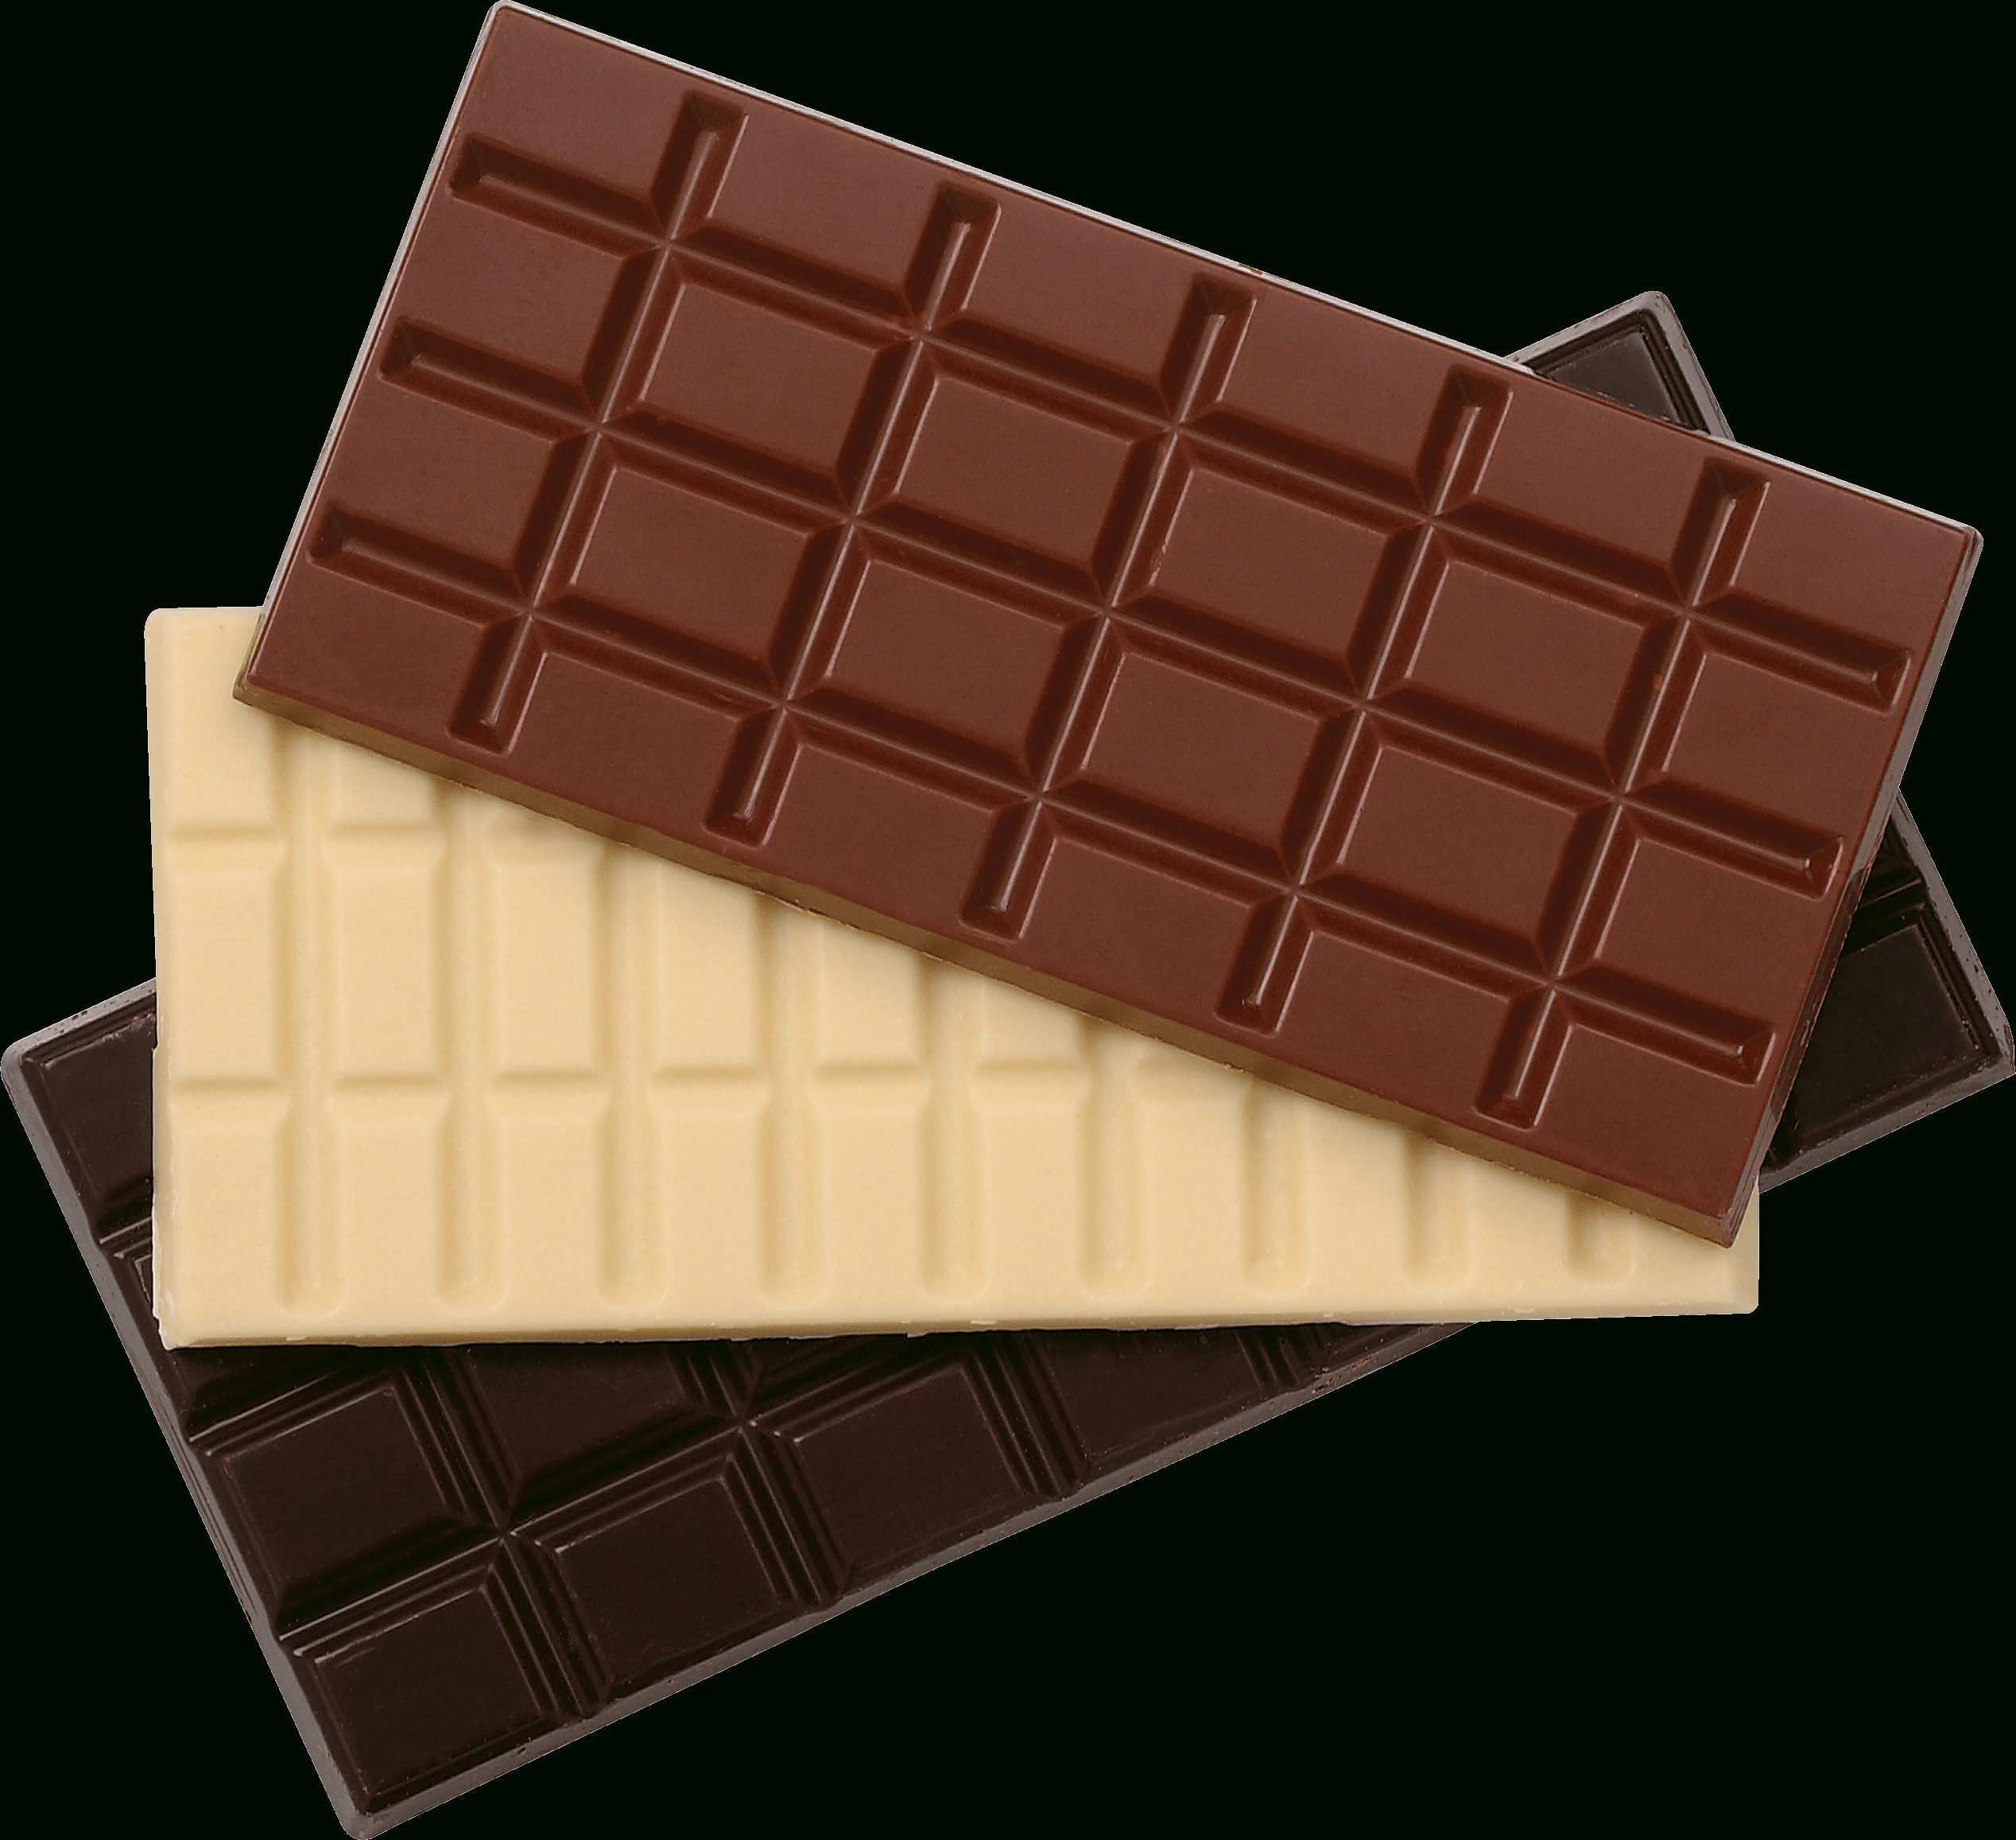 Download Chocolate Bars Png Image Hq Png Image | Freepngimg destiné Tablette Chocolat Dessin